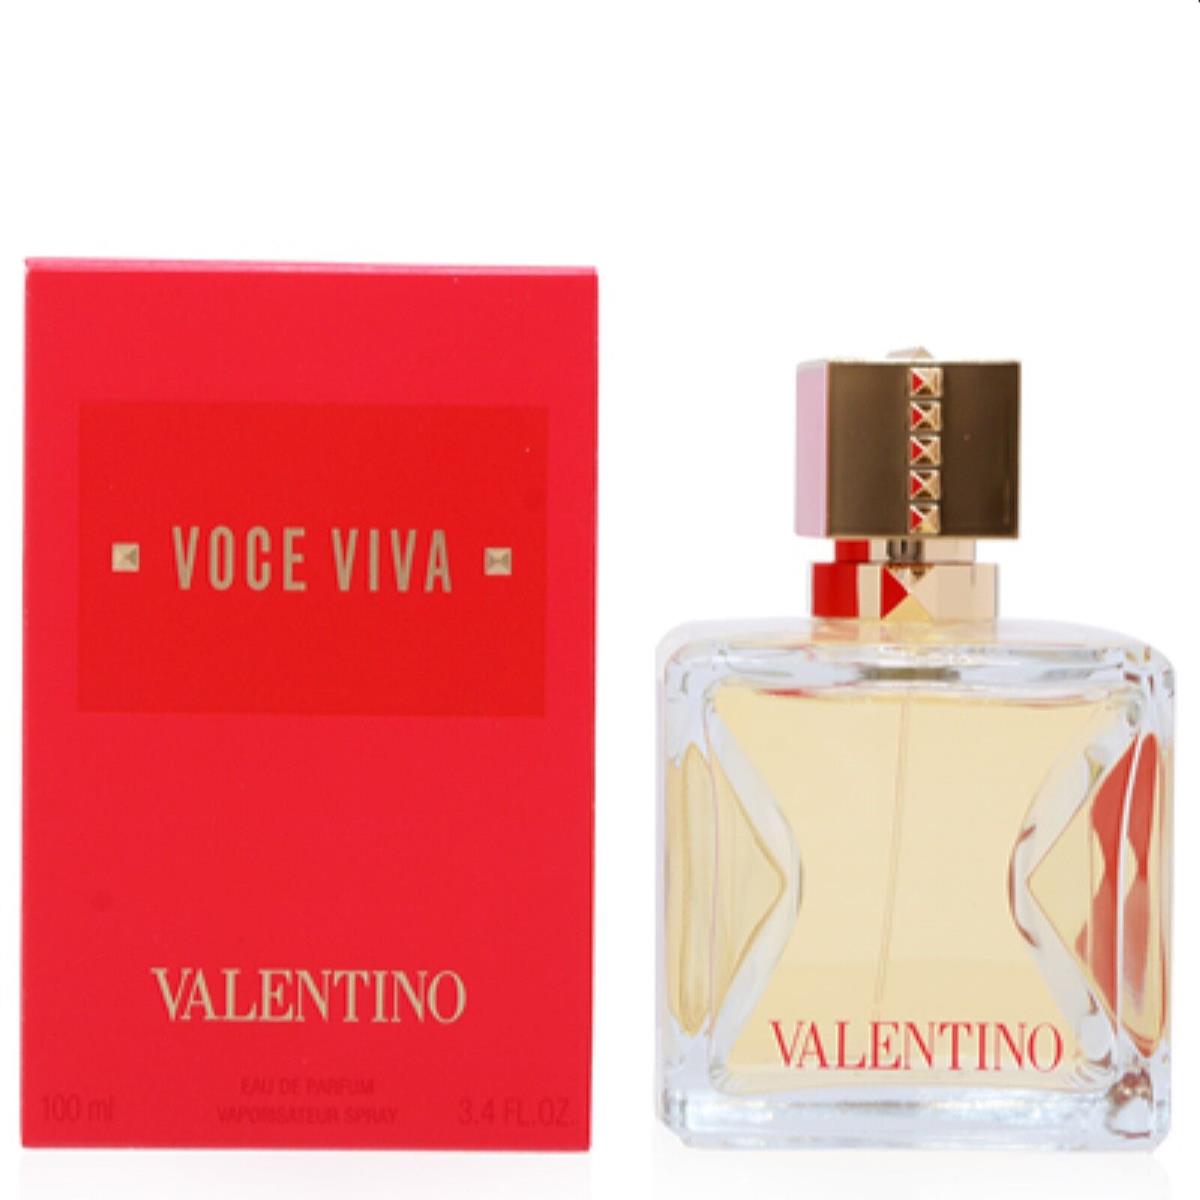 Voce Viva Valentino Edp Spray 3.4 Oz 100 Ml For Women